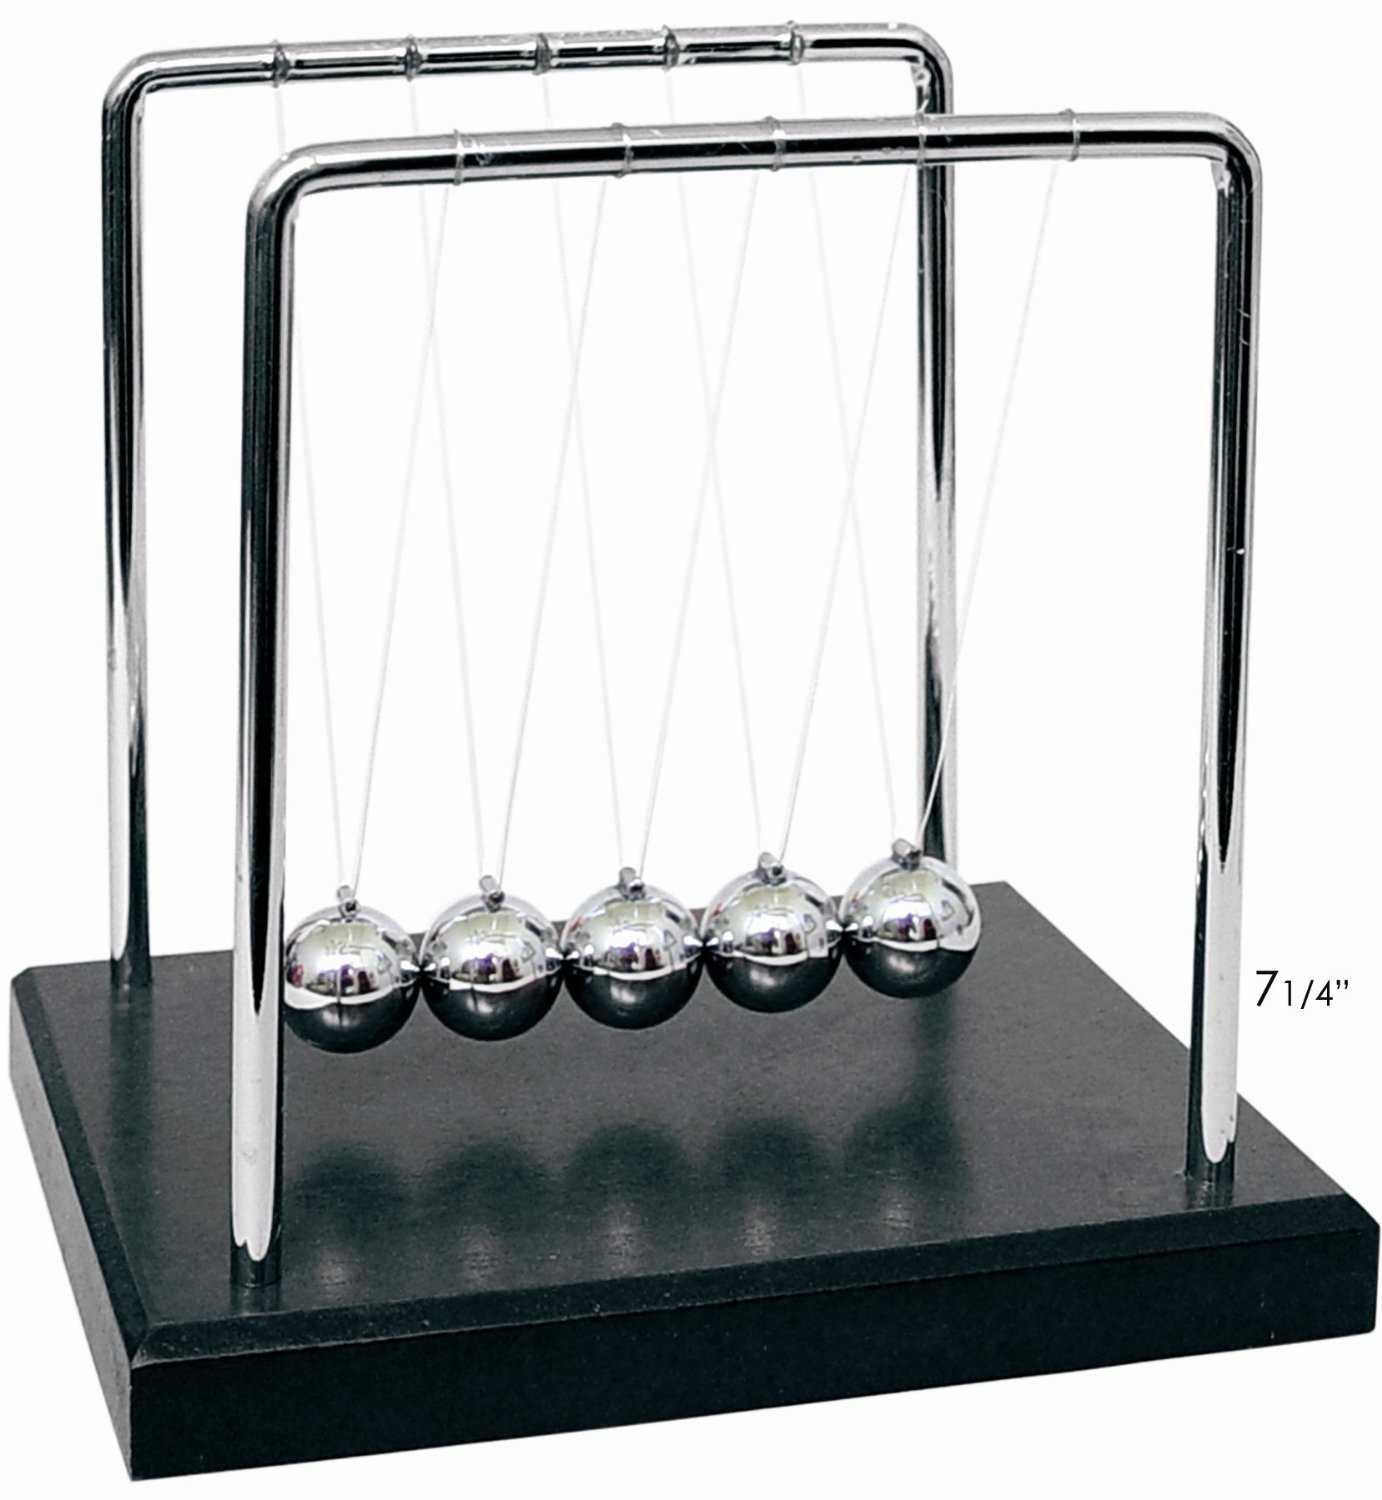 Magnetic swinging balls